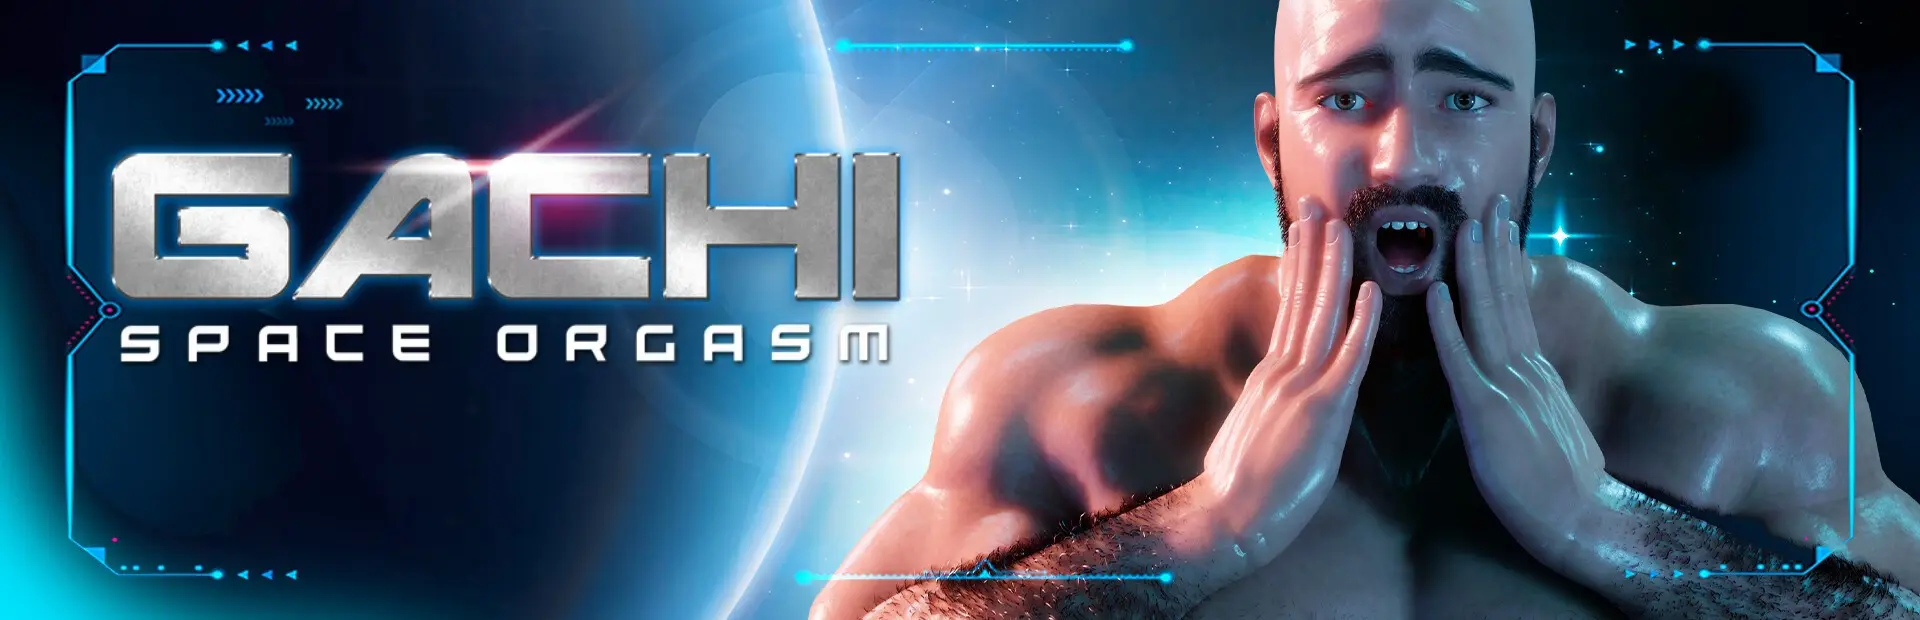 Gachi: Space Orgasm main image